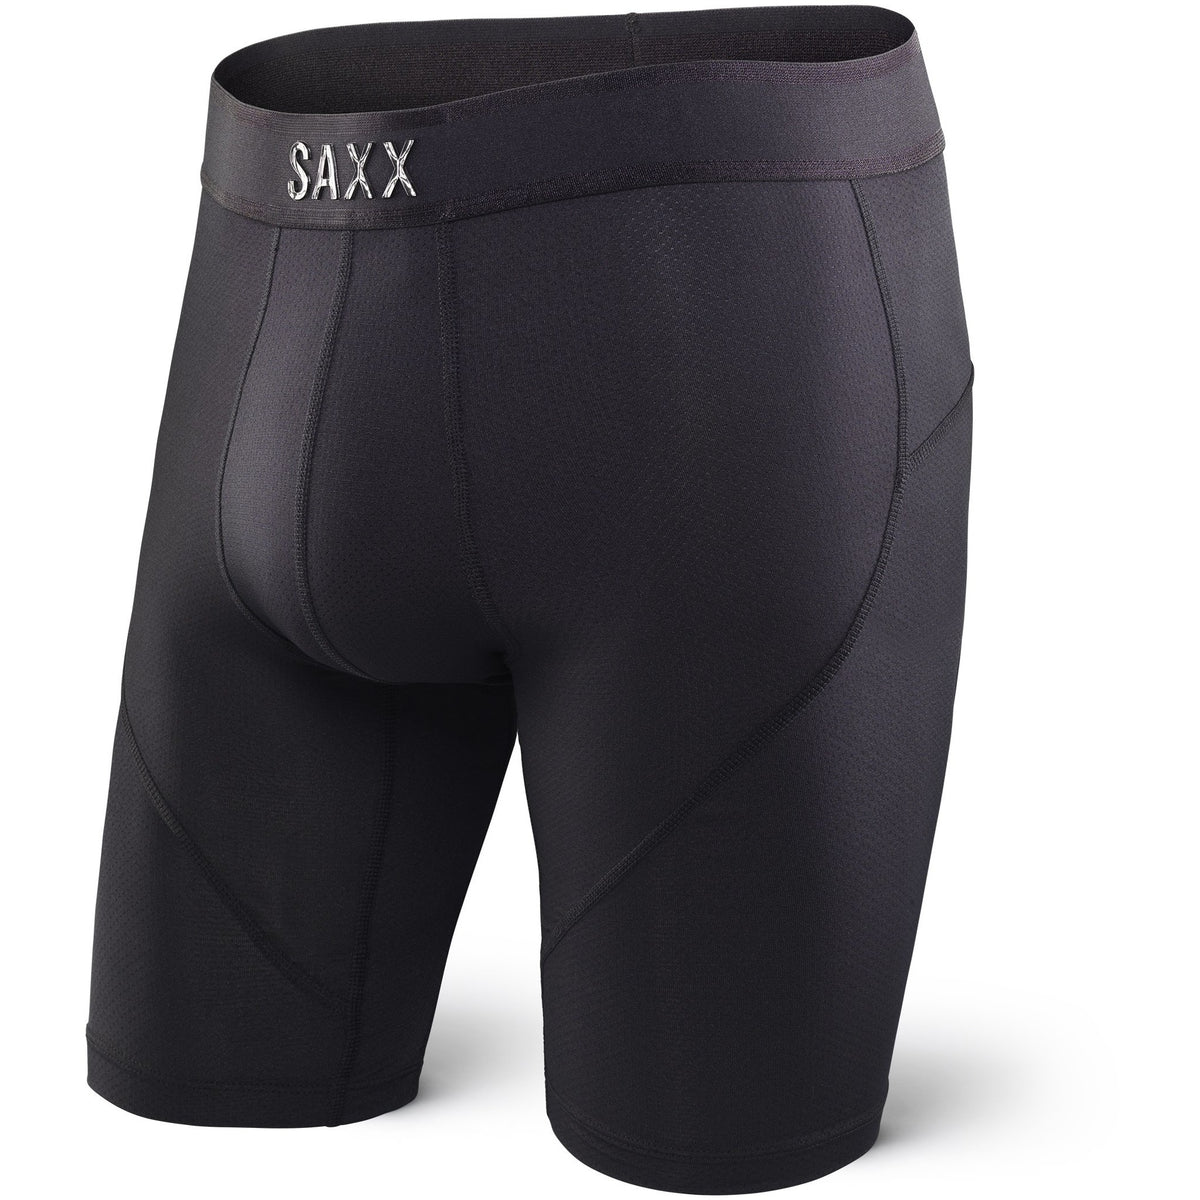  KINETIC BOXER BRIEF black/tide - boxers - SAXX - 28.38 € -  outdoorové oblečení a vybavení shop